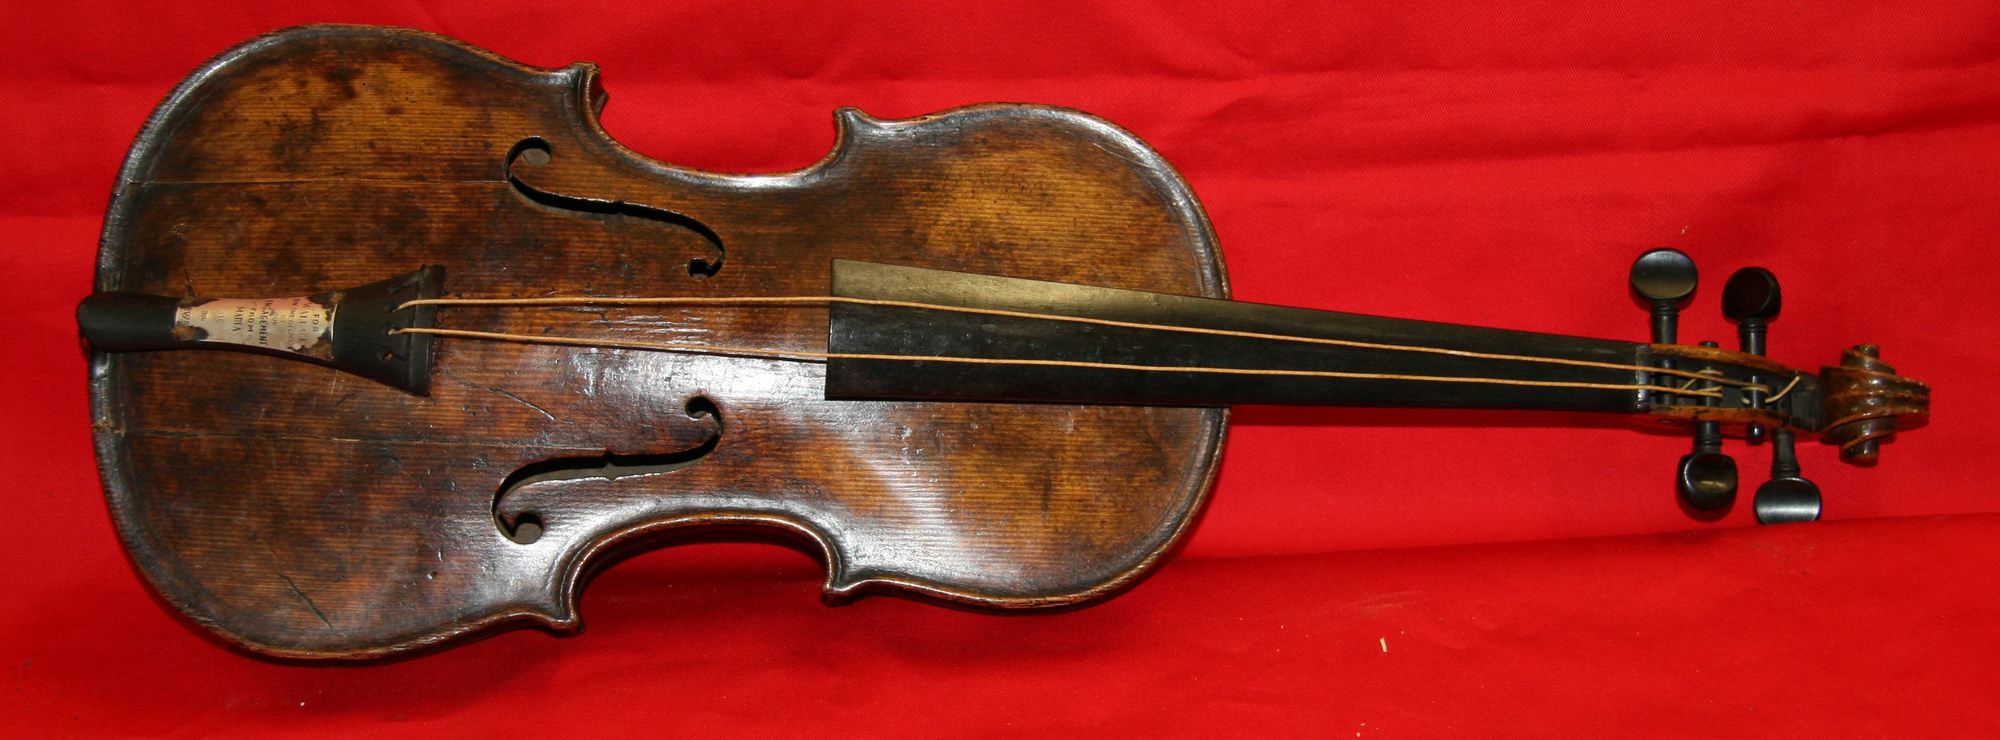 titanic violin found